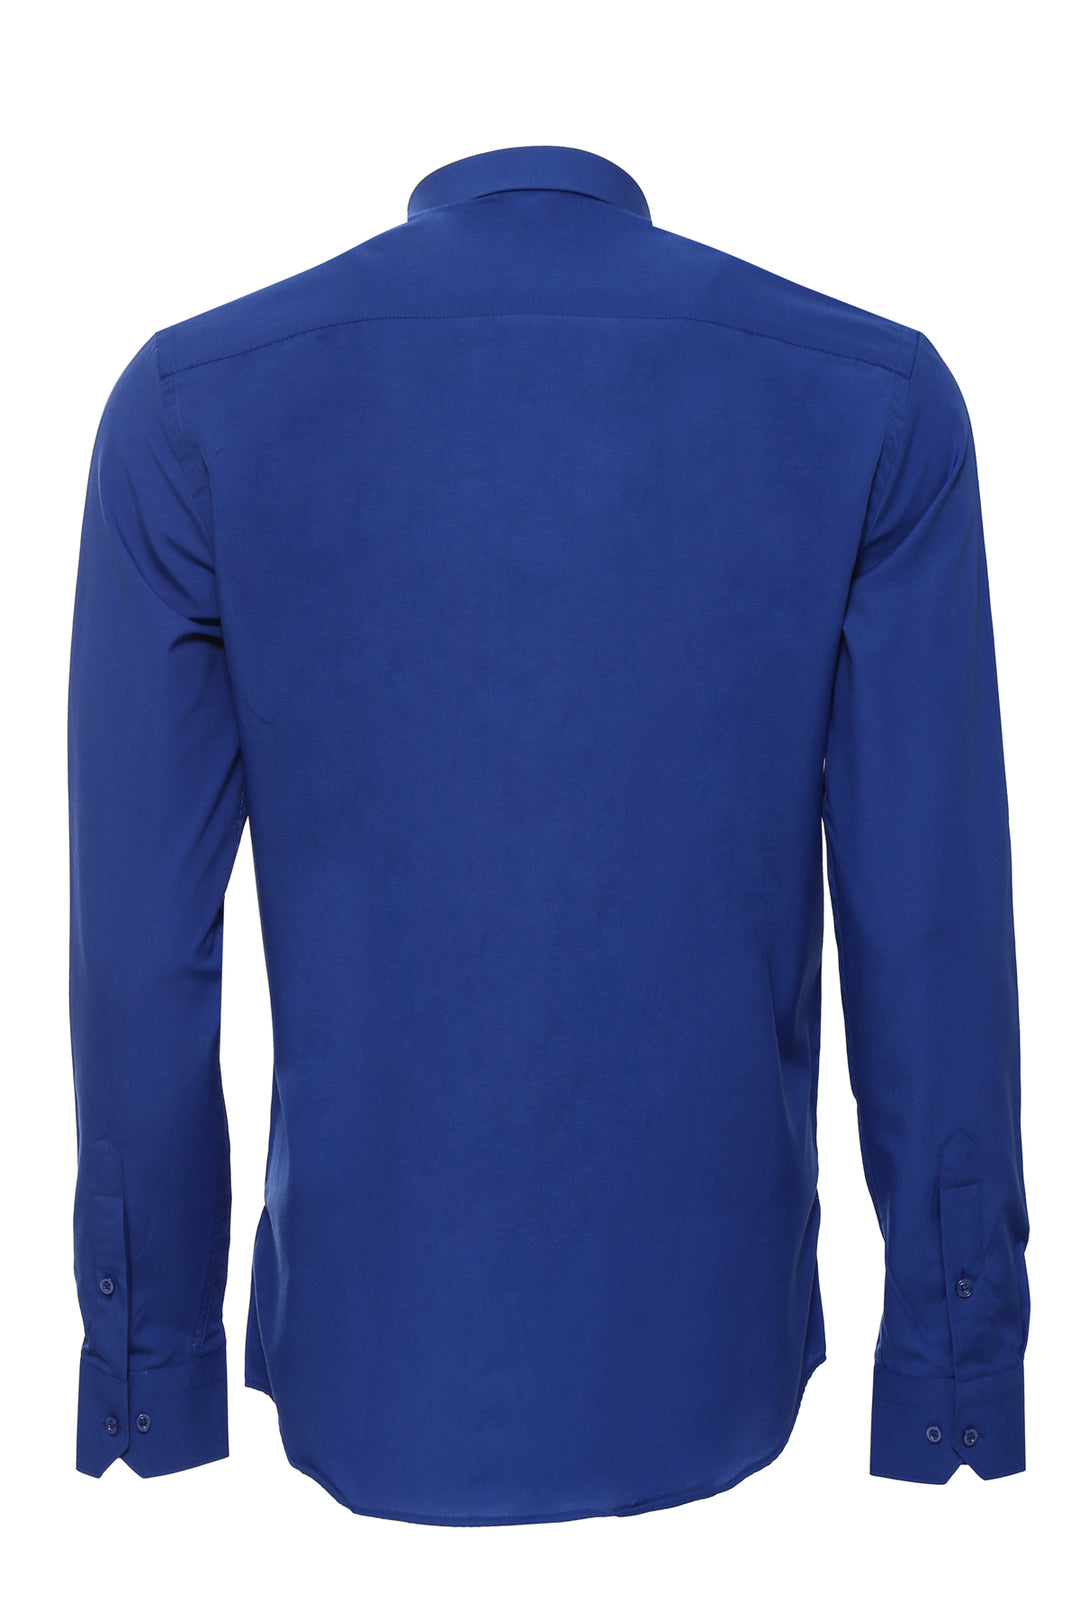 Plain Long Sleeves Indigo Blue Men Shirt - Wessi